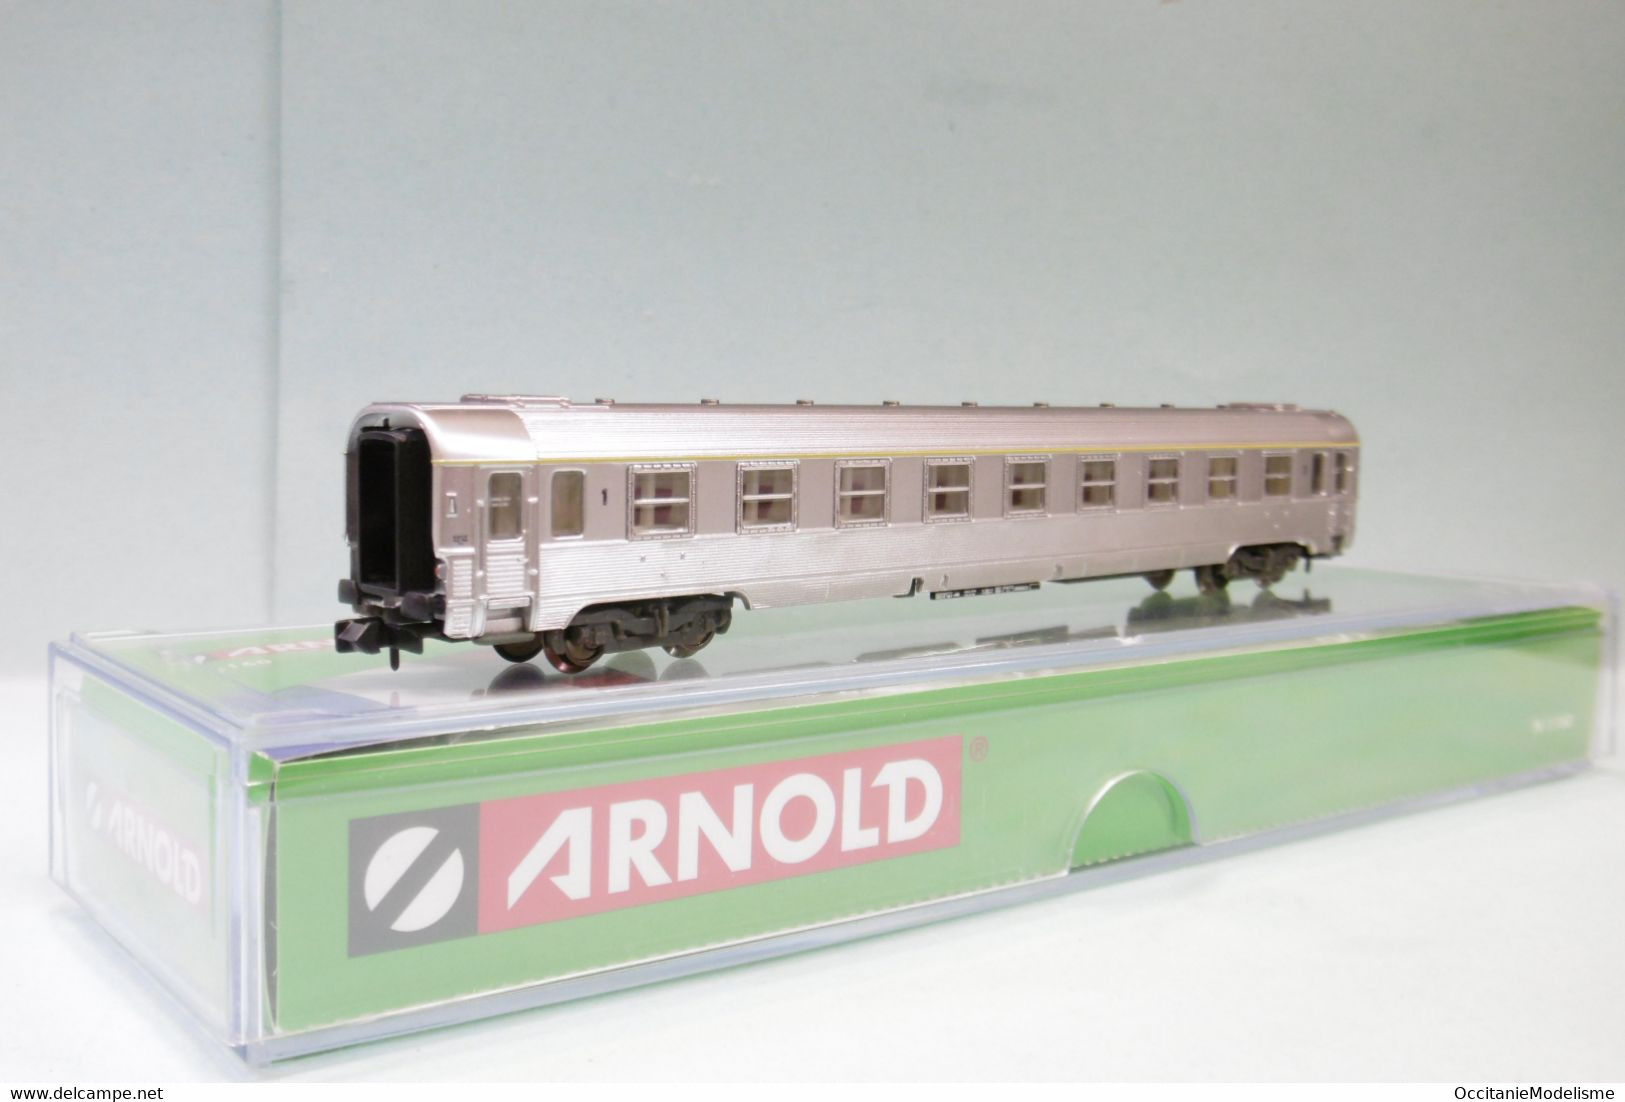 Arnold - Voiture DEV INOX A9 1ère Classe SNCF ép. III Réf. HN4323 Neuf N 1/160 - Passenger Trains